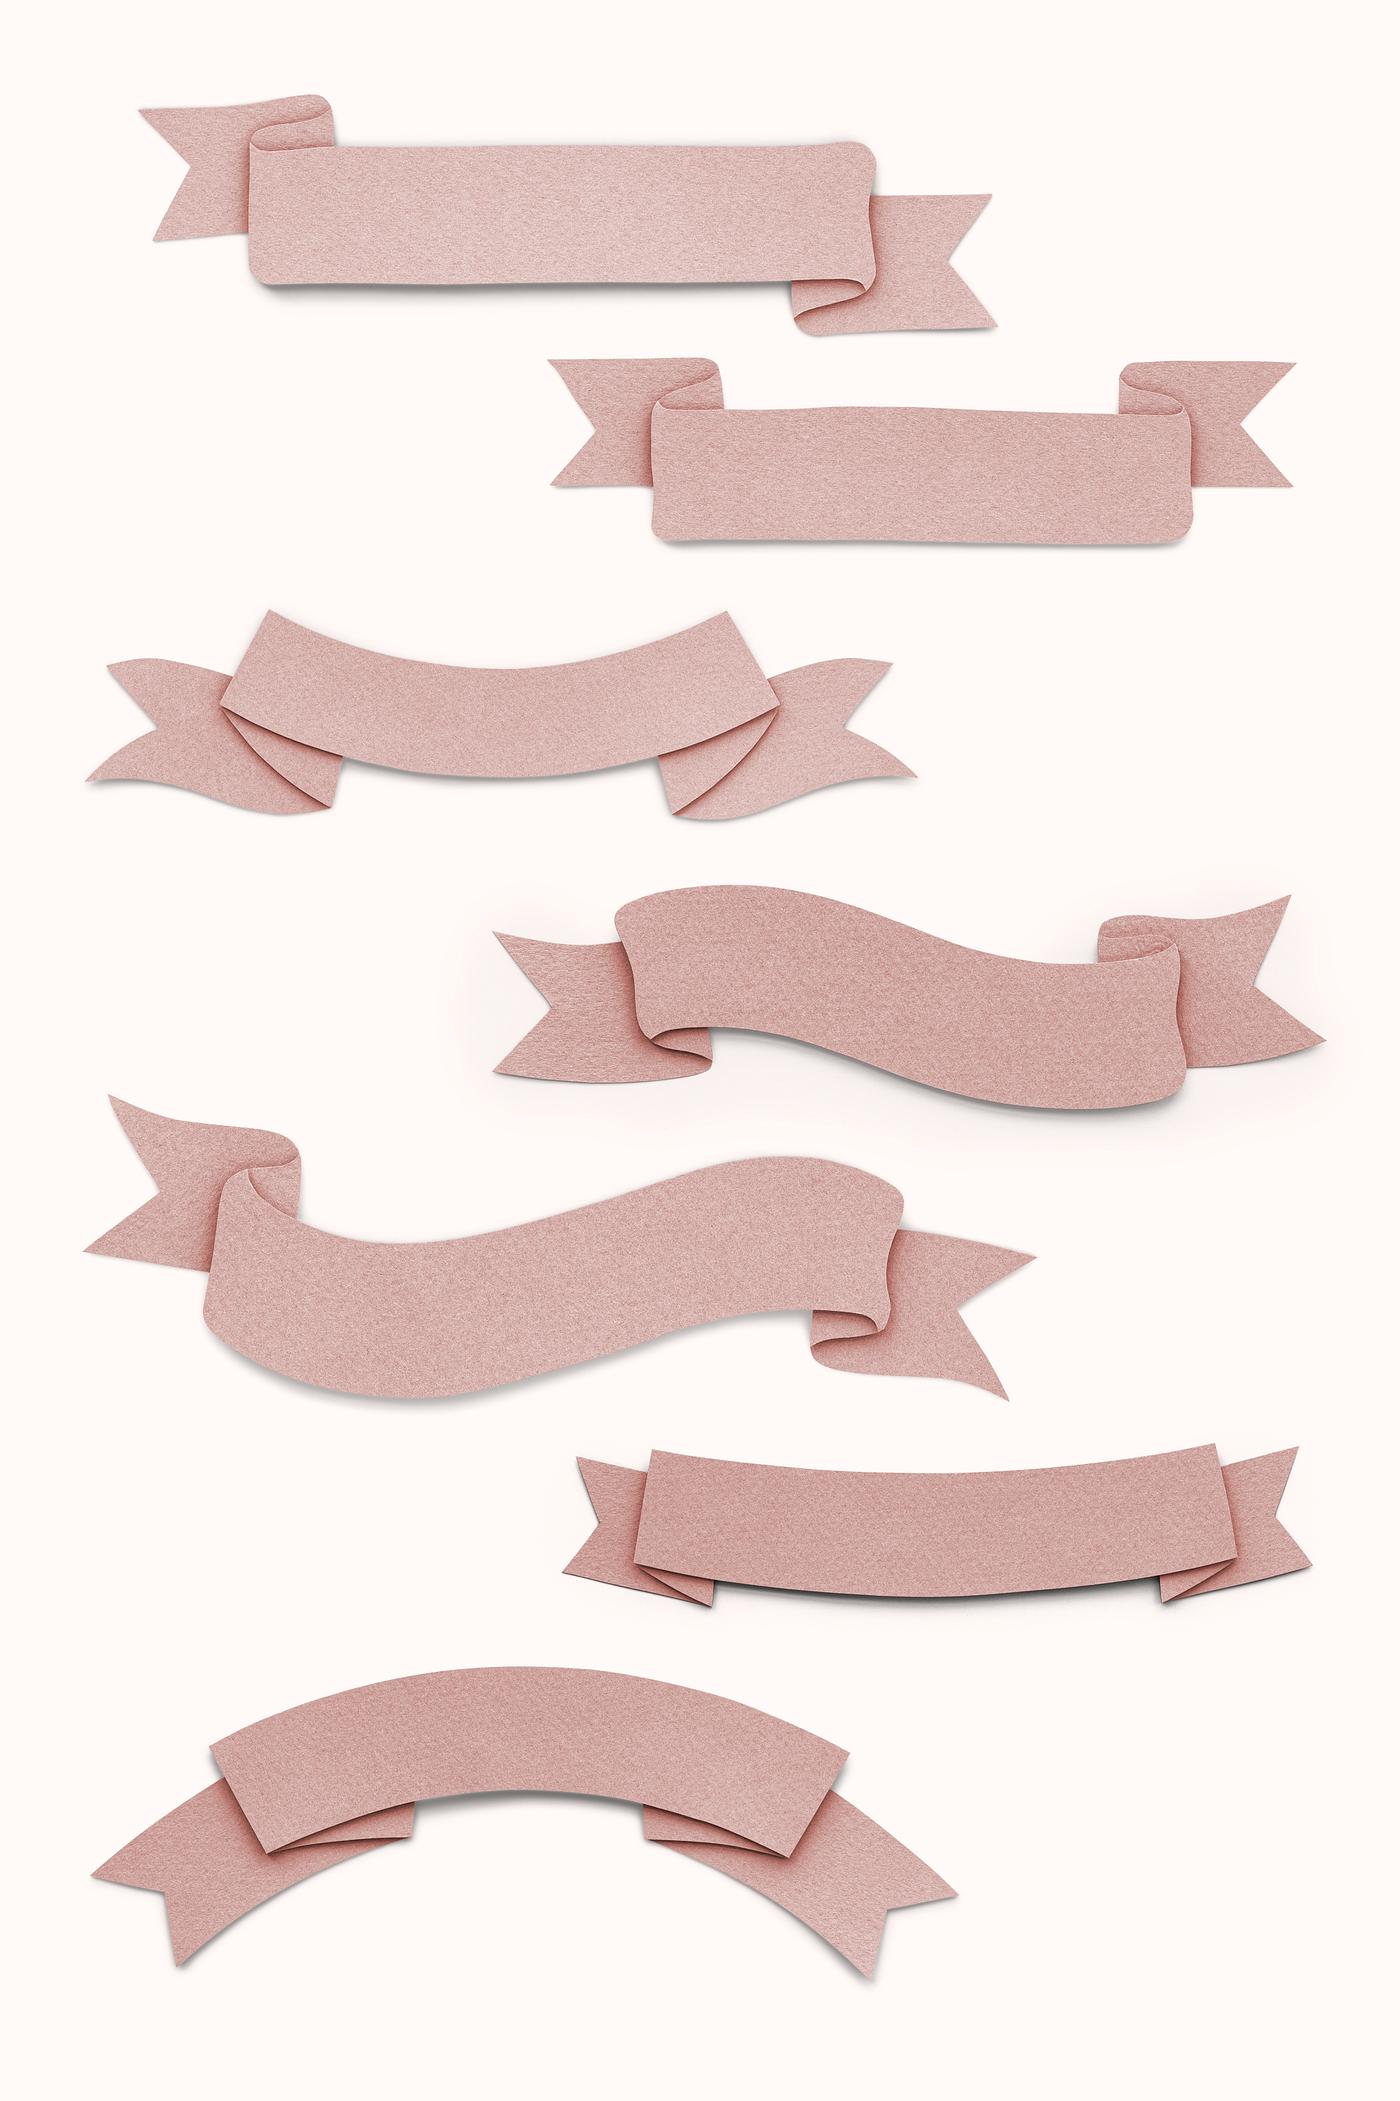 Download Paper craft ribbon set | Royalty free stock psd mockup ...